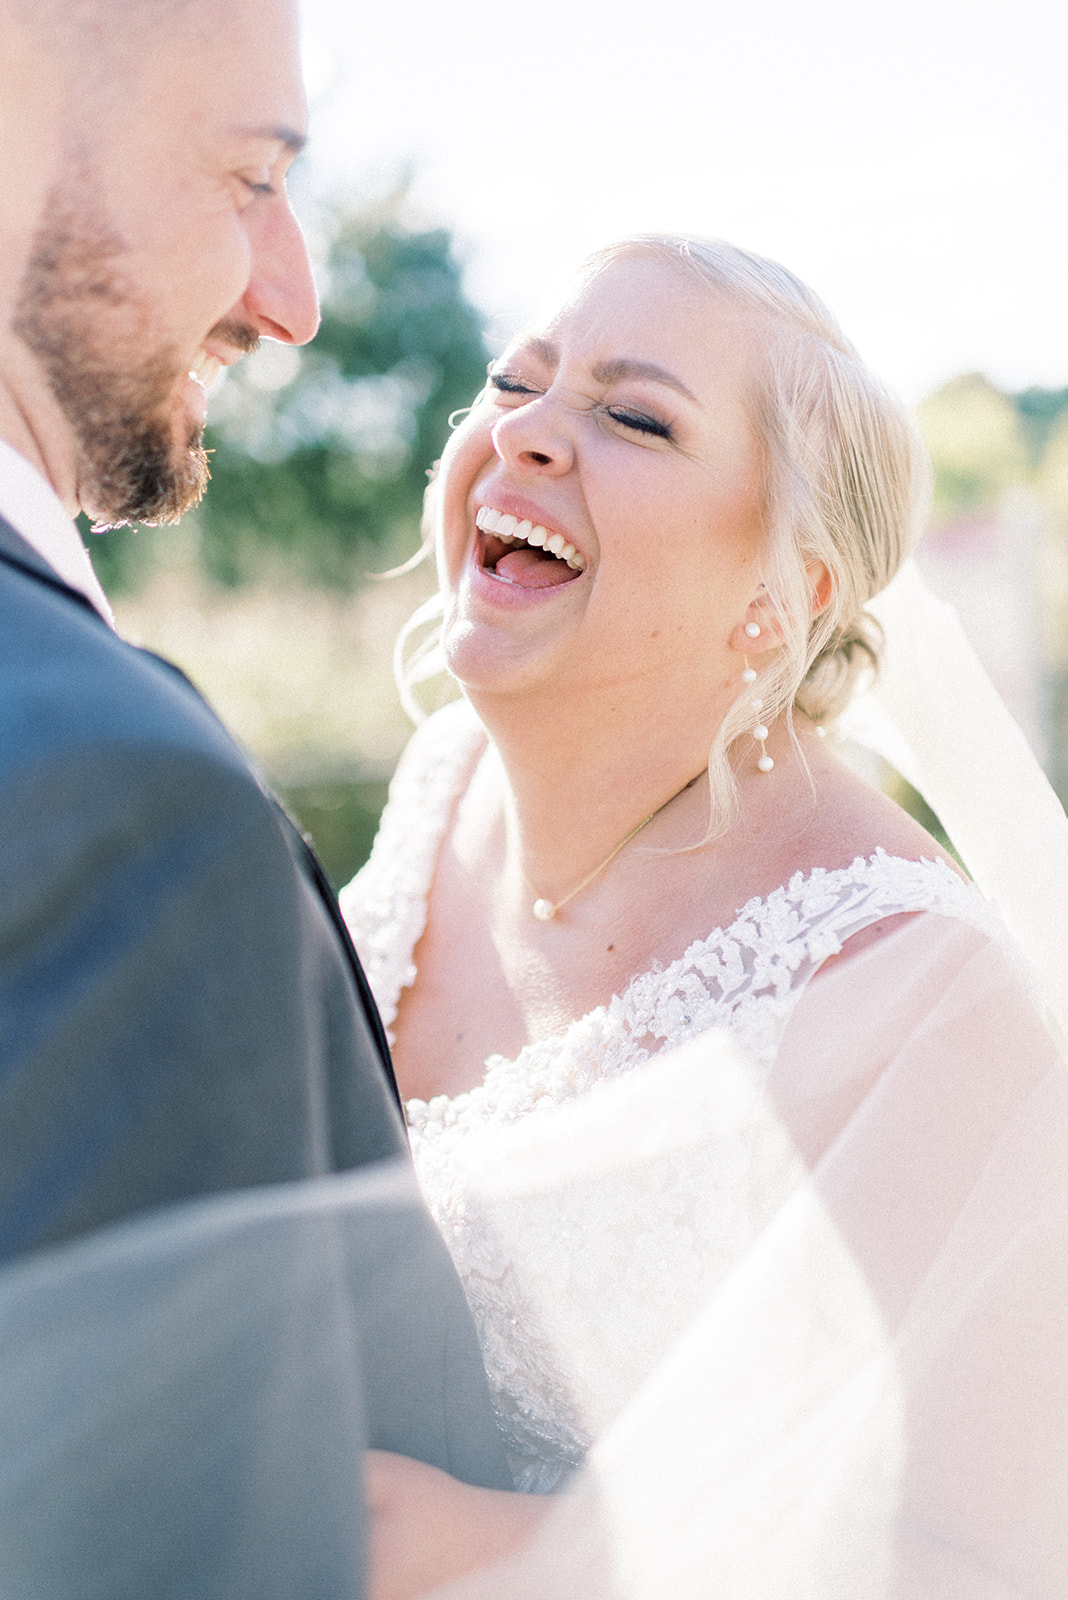 Pennsylvania wedding photographer captures bride laughing during outdoor bridal portraits